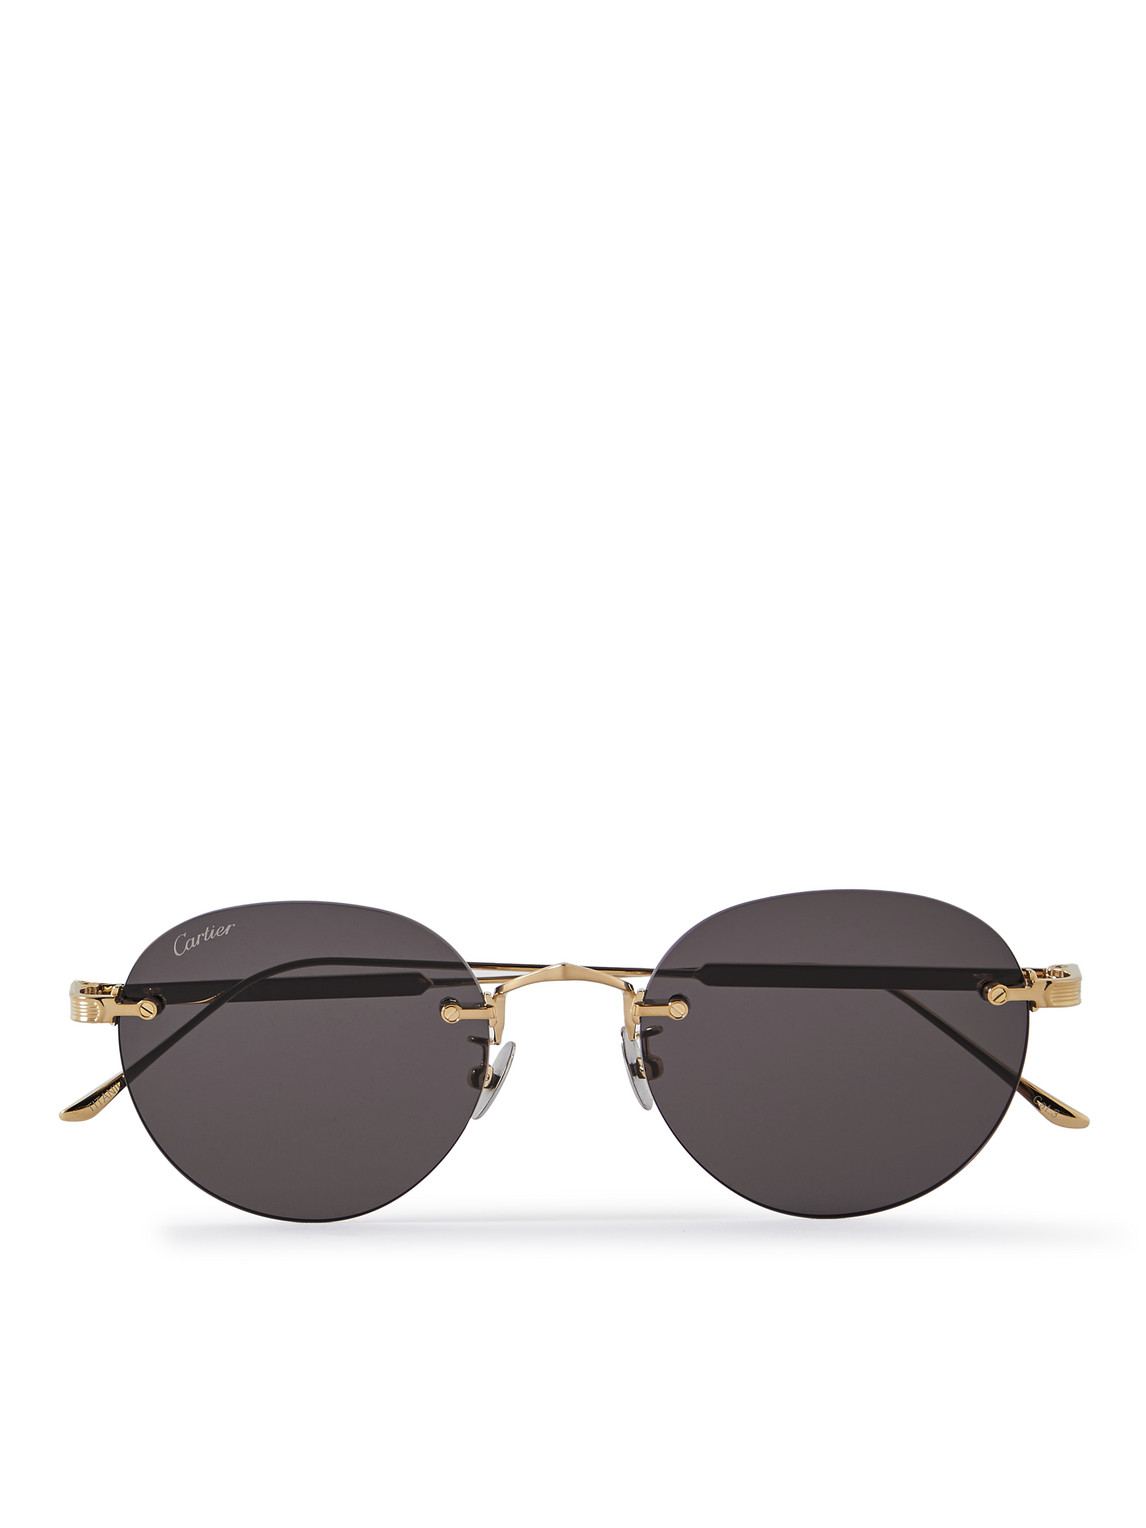 Cartier Frameless Gold-tone Sunglasses